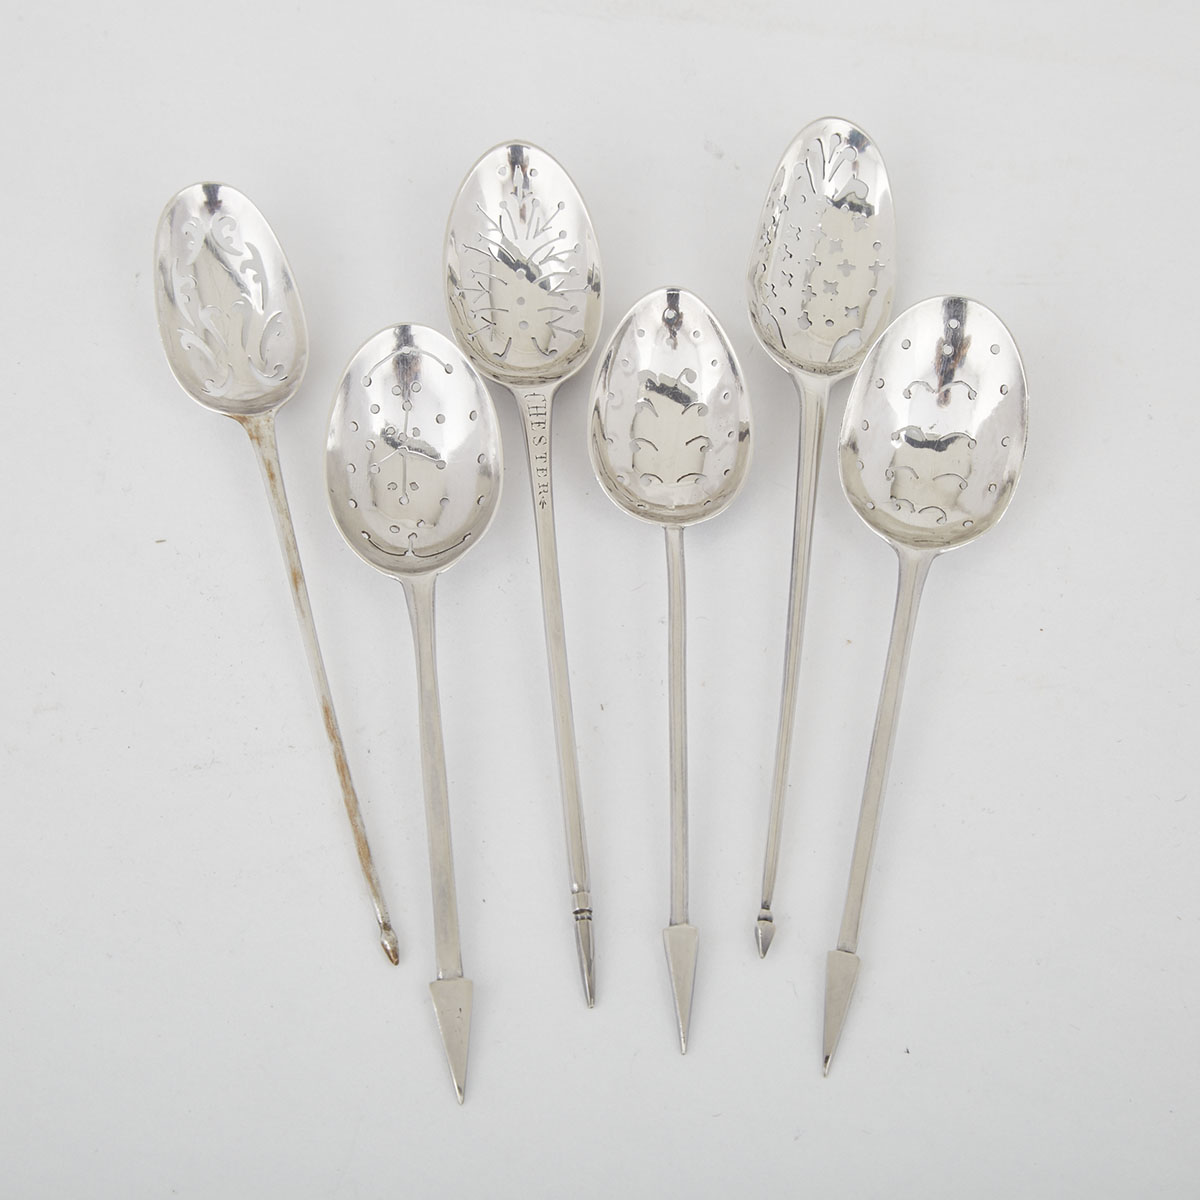 Six George II/III Silver Mote Spoons, mid-18th century